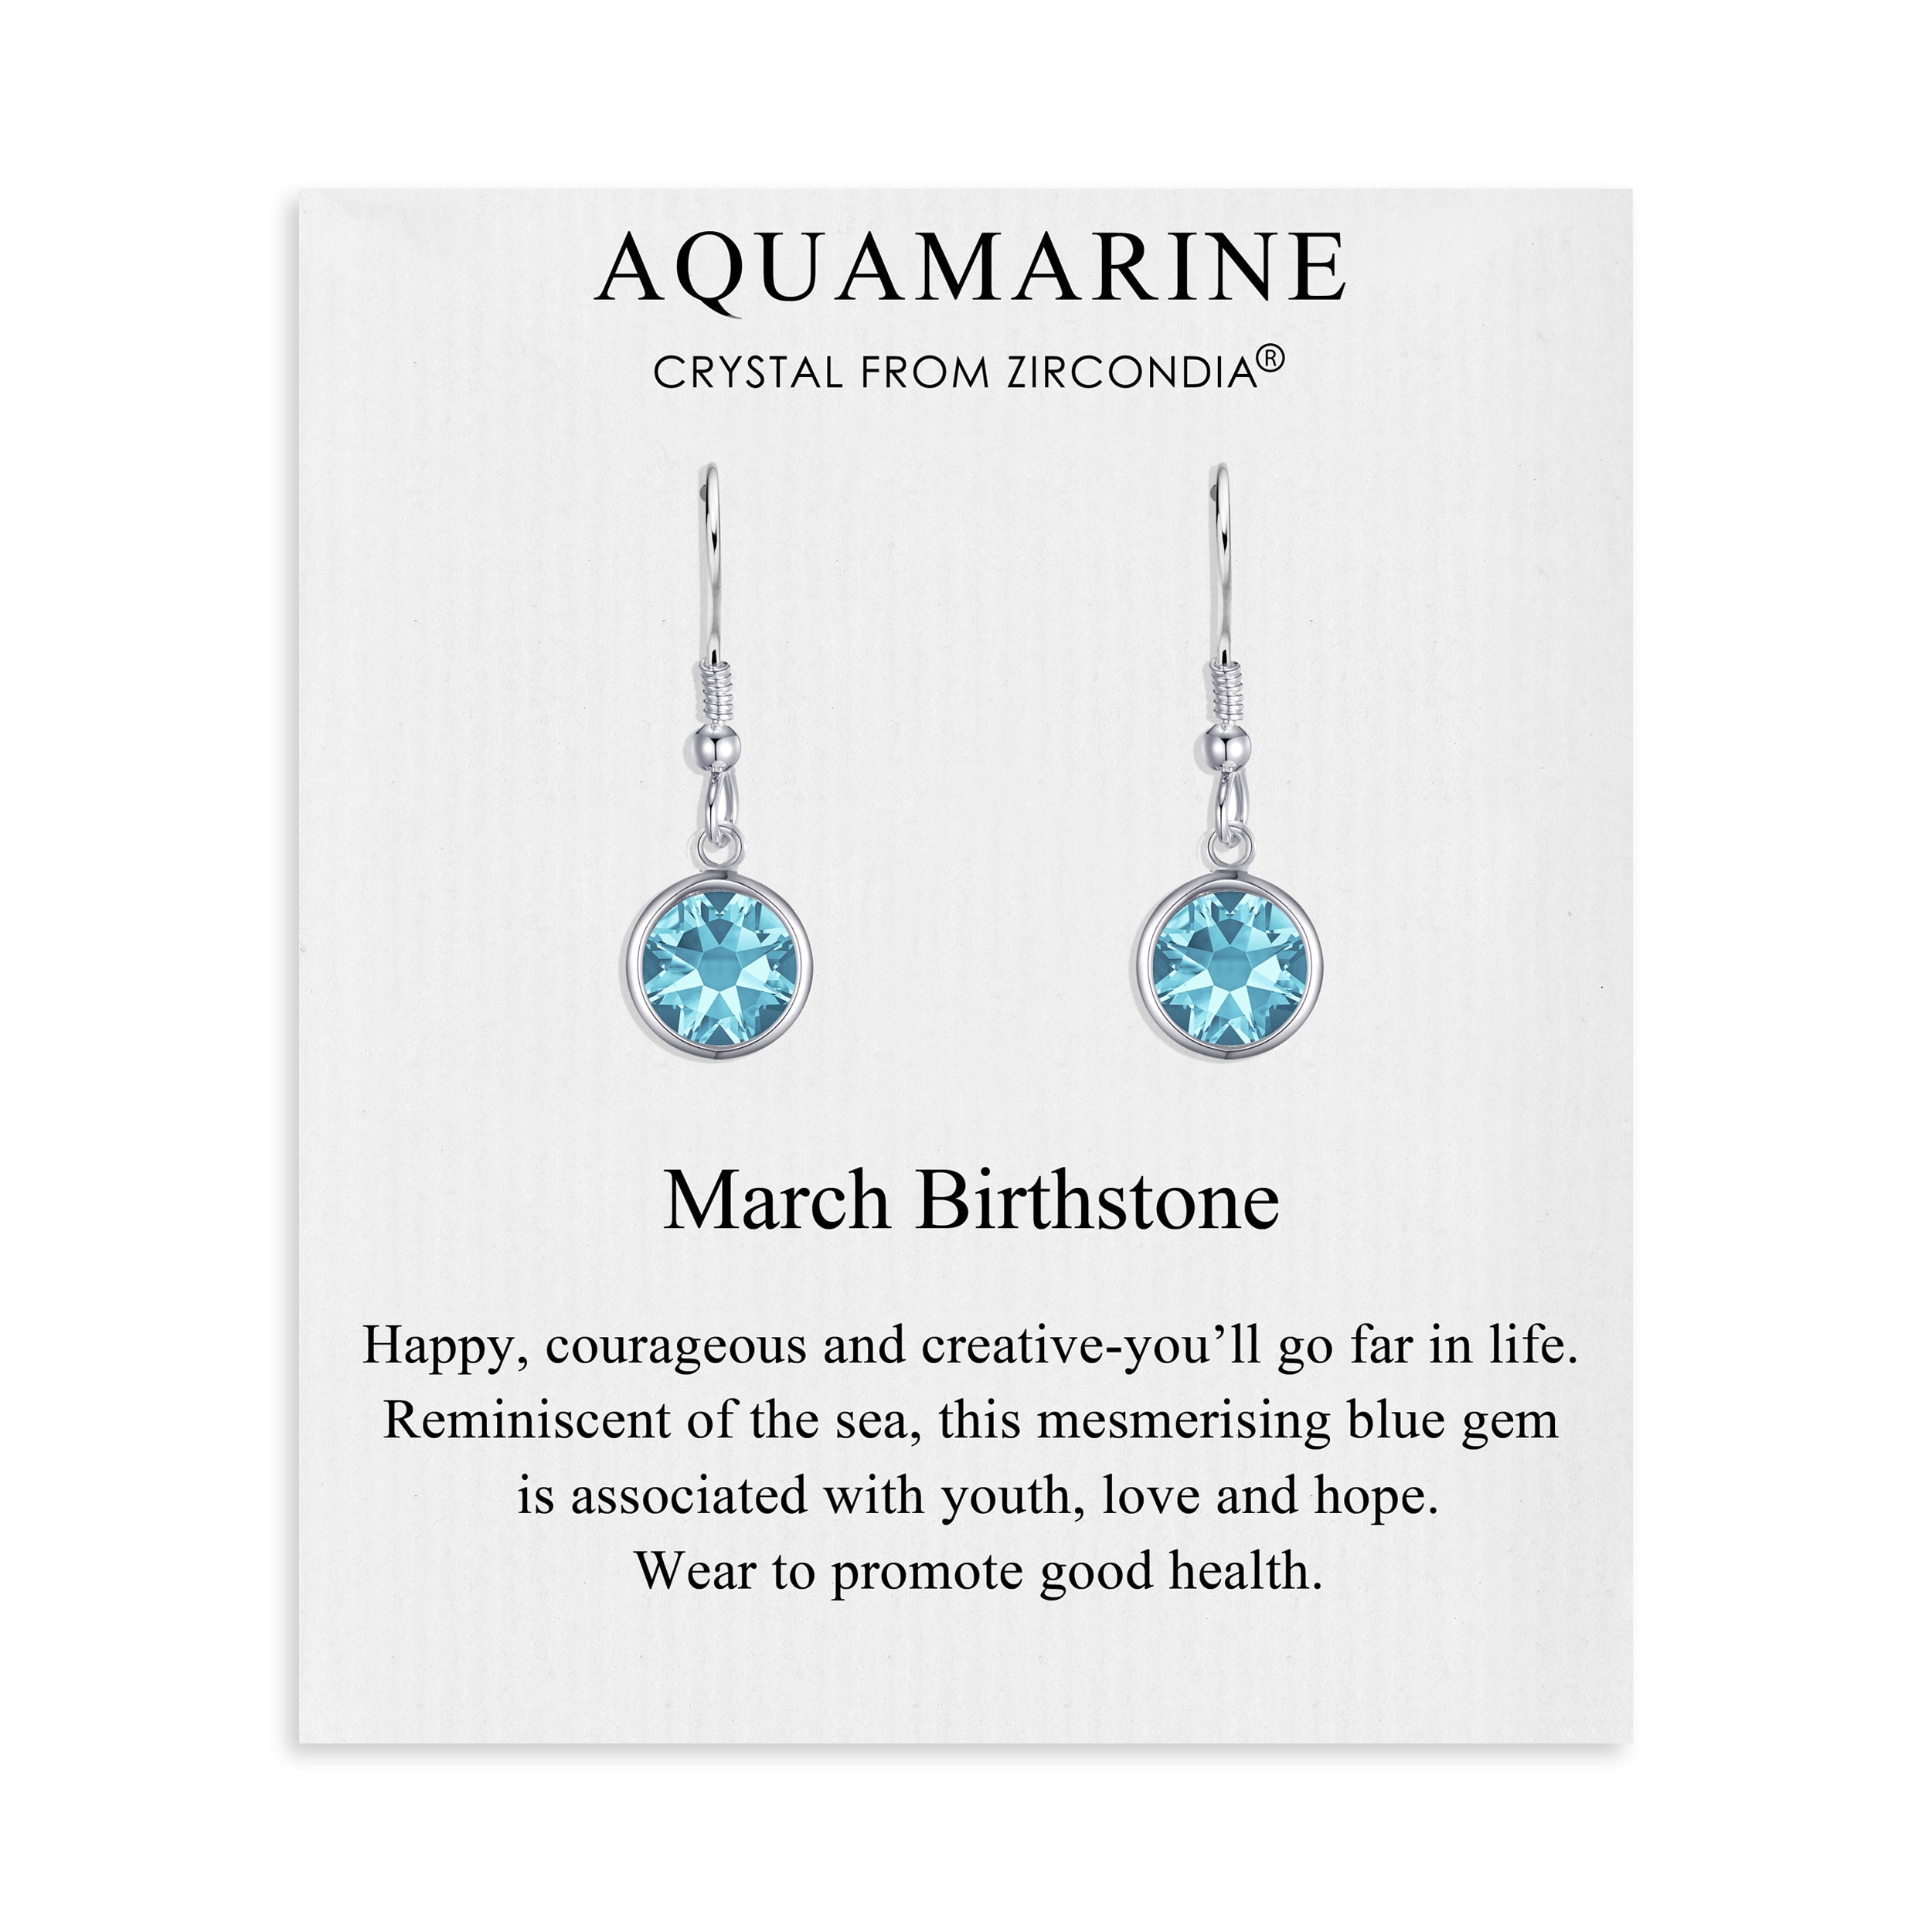 March Birthstone Drop Earrings Created with Aquamarine Zircondia® Crystals by Philip Jones Jewellery